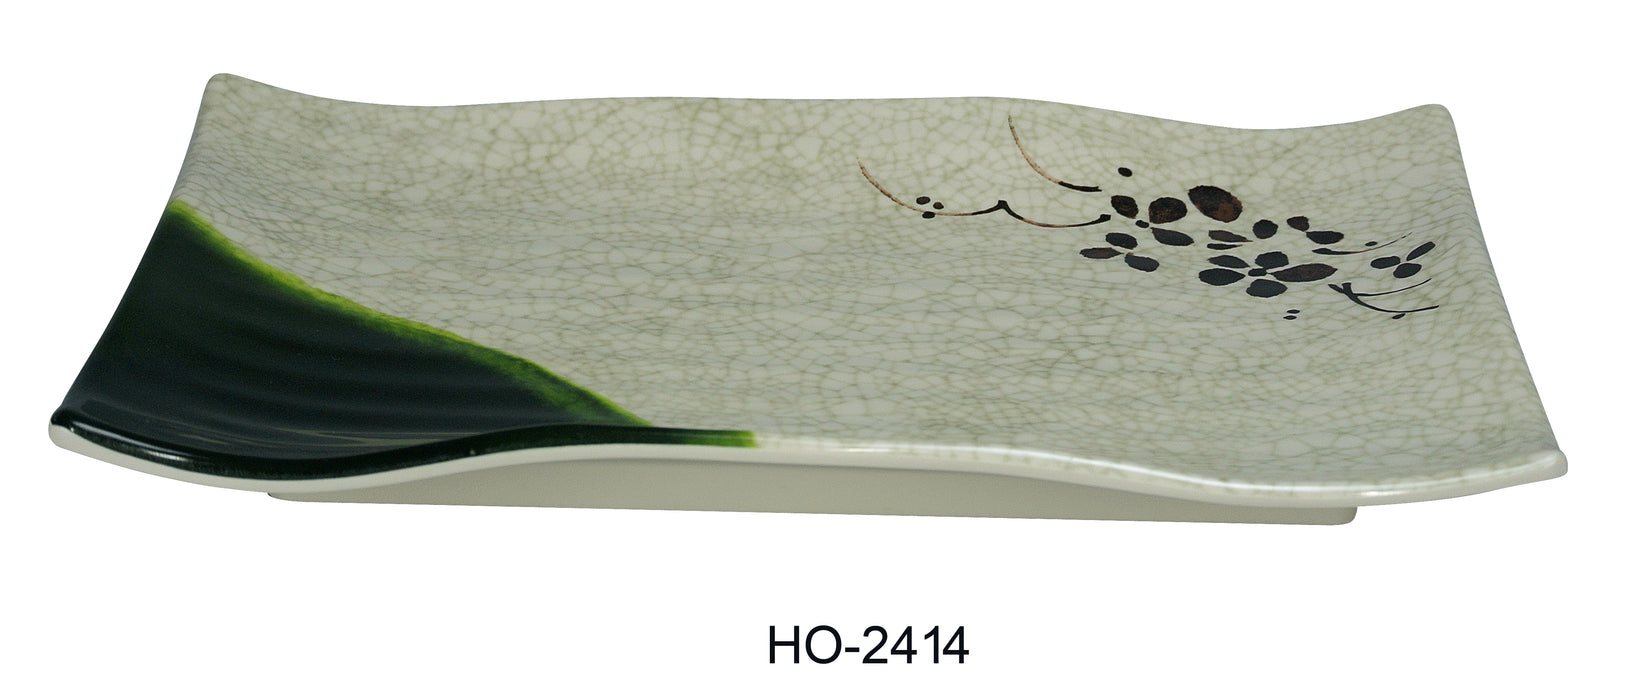 Yanco HO-2414 Honda Ripple Plate, Shape: Rectangular, Color: Three-Tone Green, Brown, Beige, Material: Melamine, Pack of 36